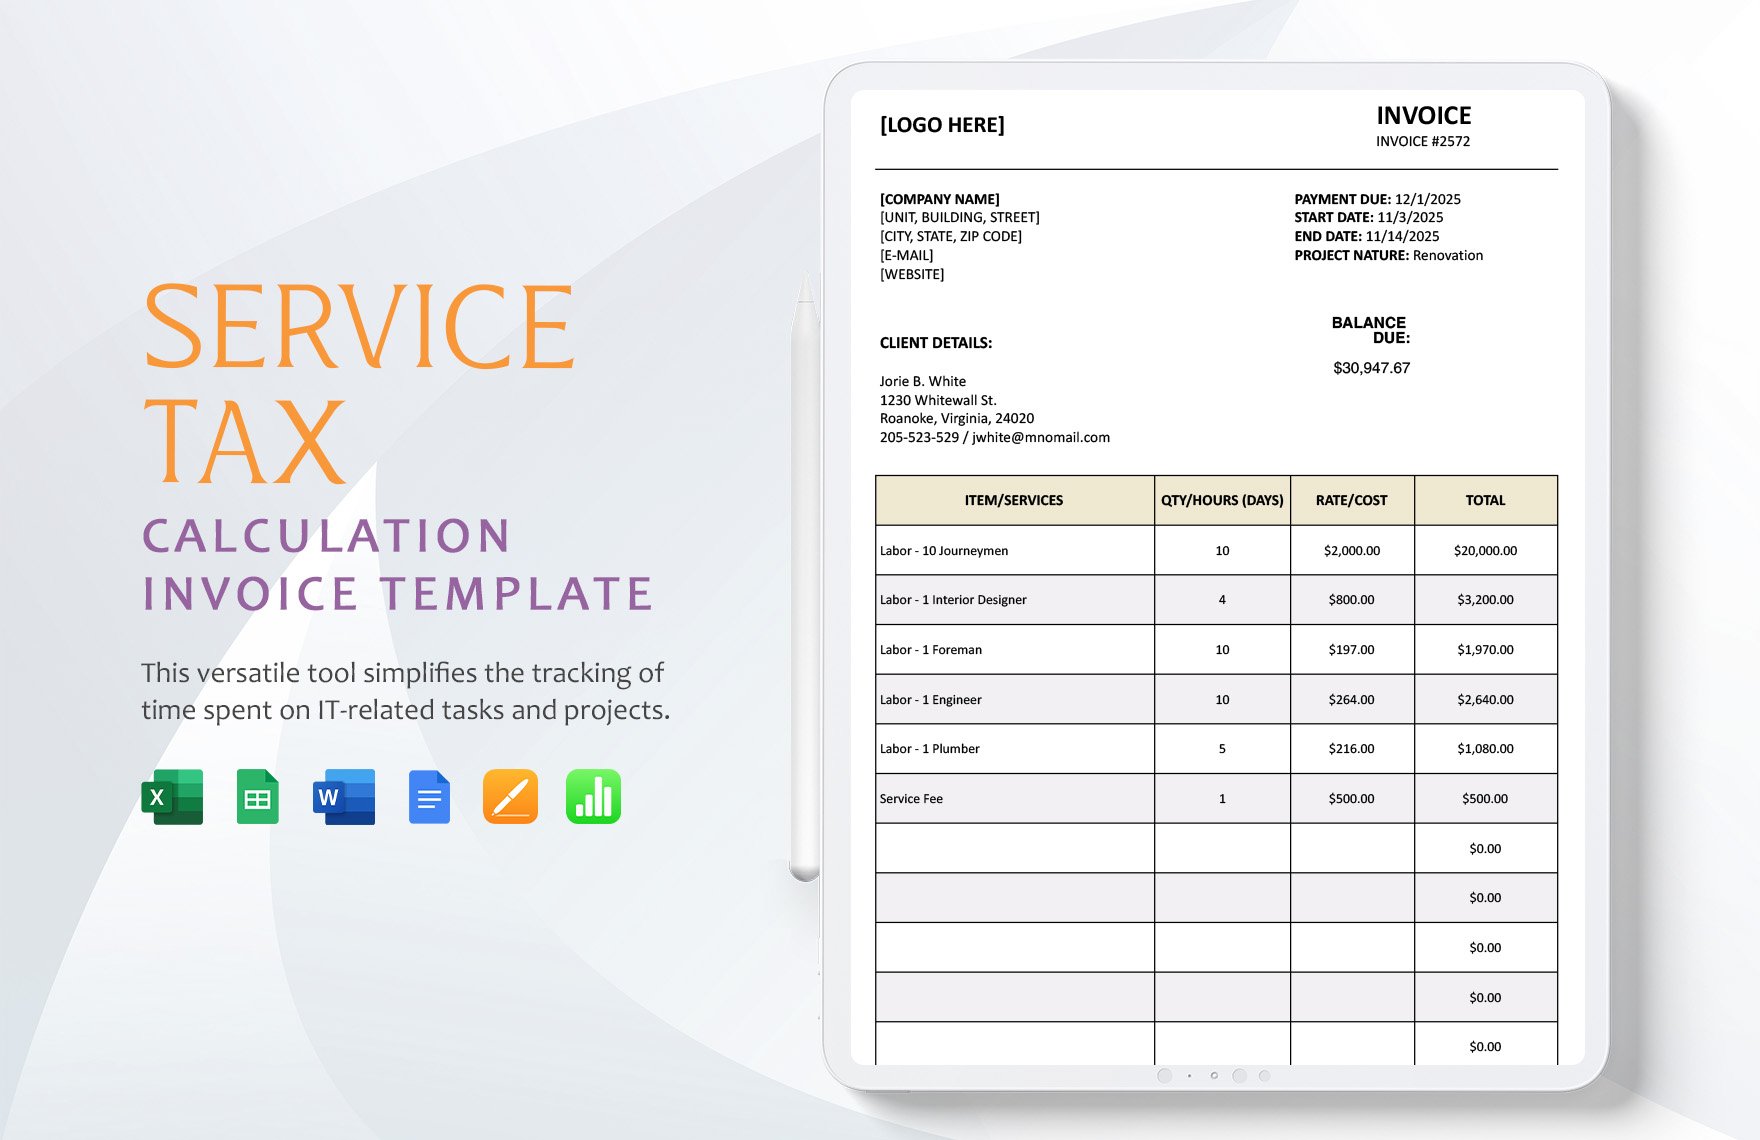 Service Tax Calculation Invoice Template